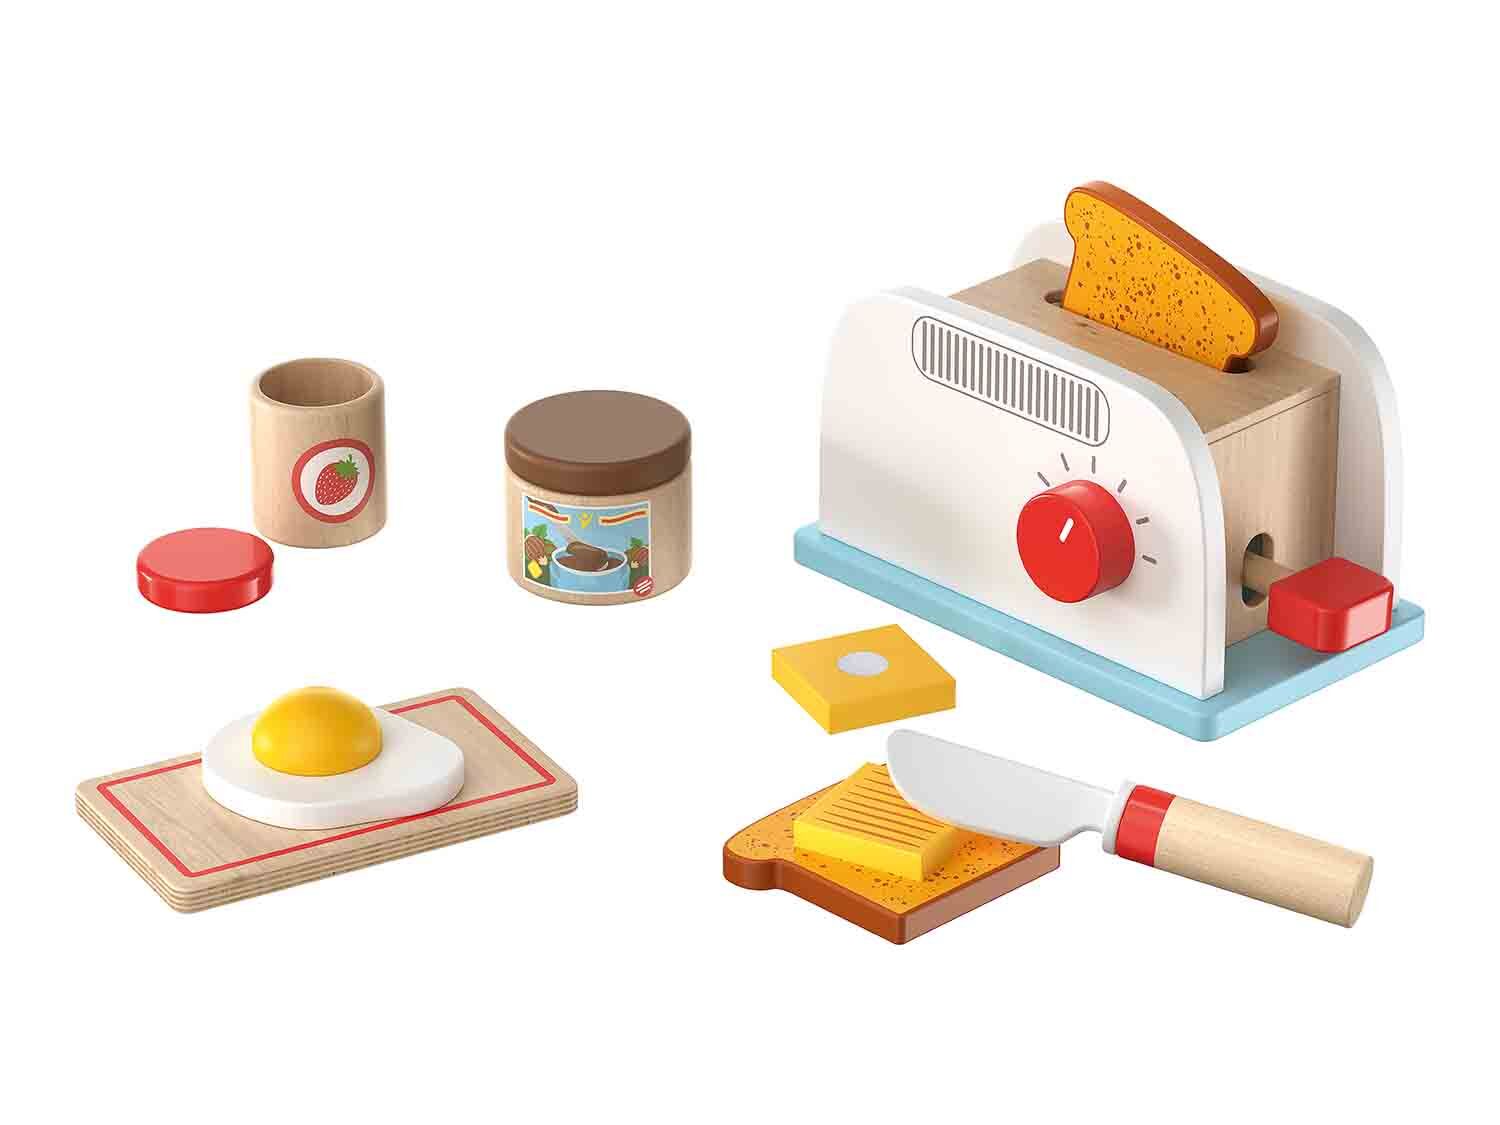 Accesorios de cocina de madera: Set de cafetera/ Set de té/ Robot de cocina/ Tostadora/ Set de desayuno